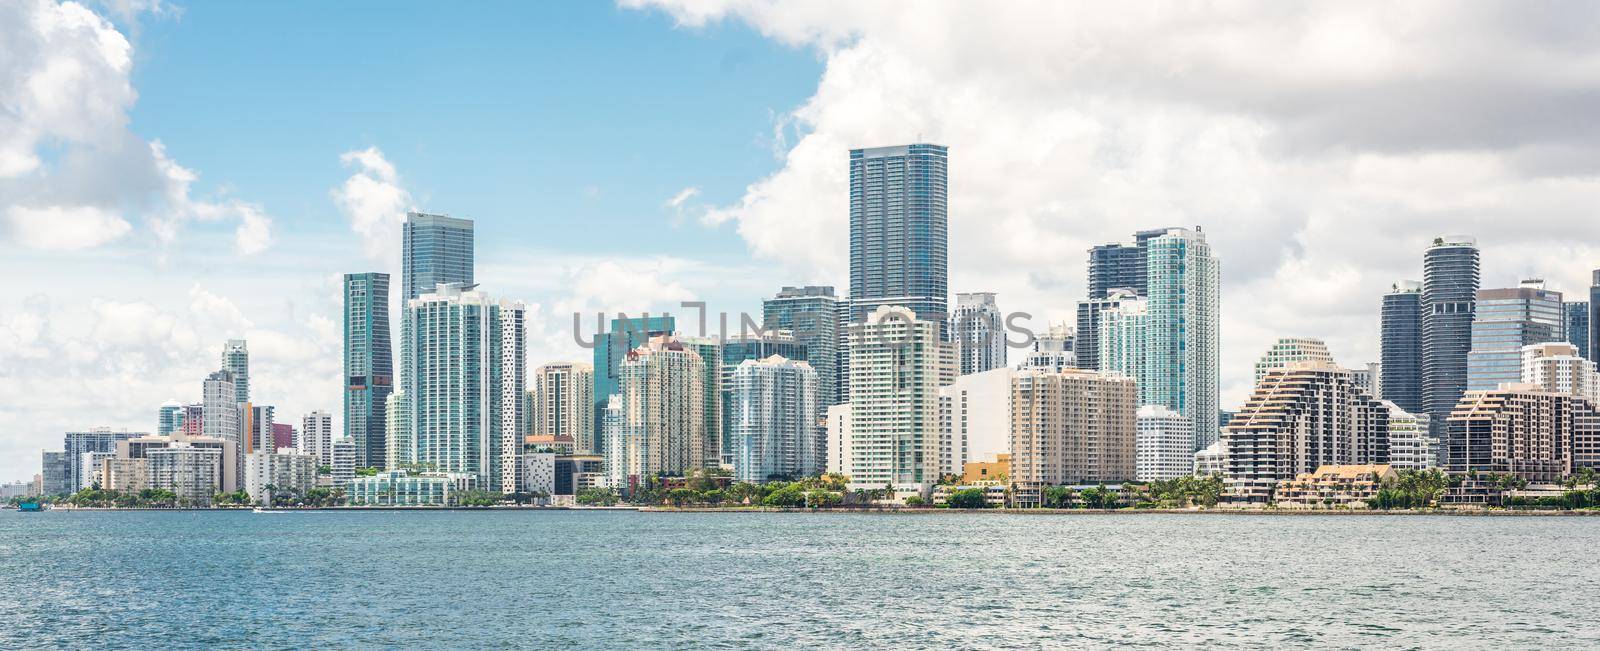 Miami Downtown skyline in a daytime with Biscayne Bay